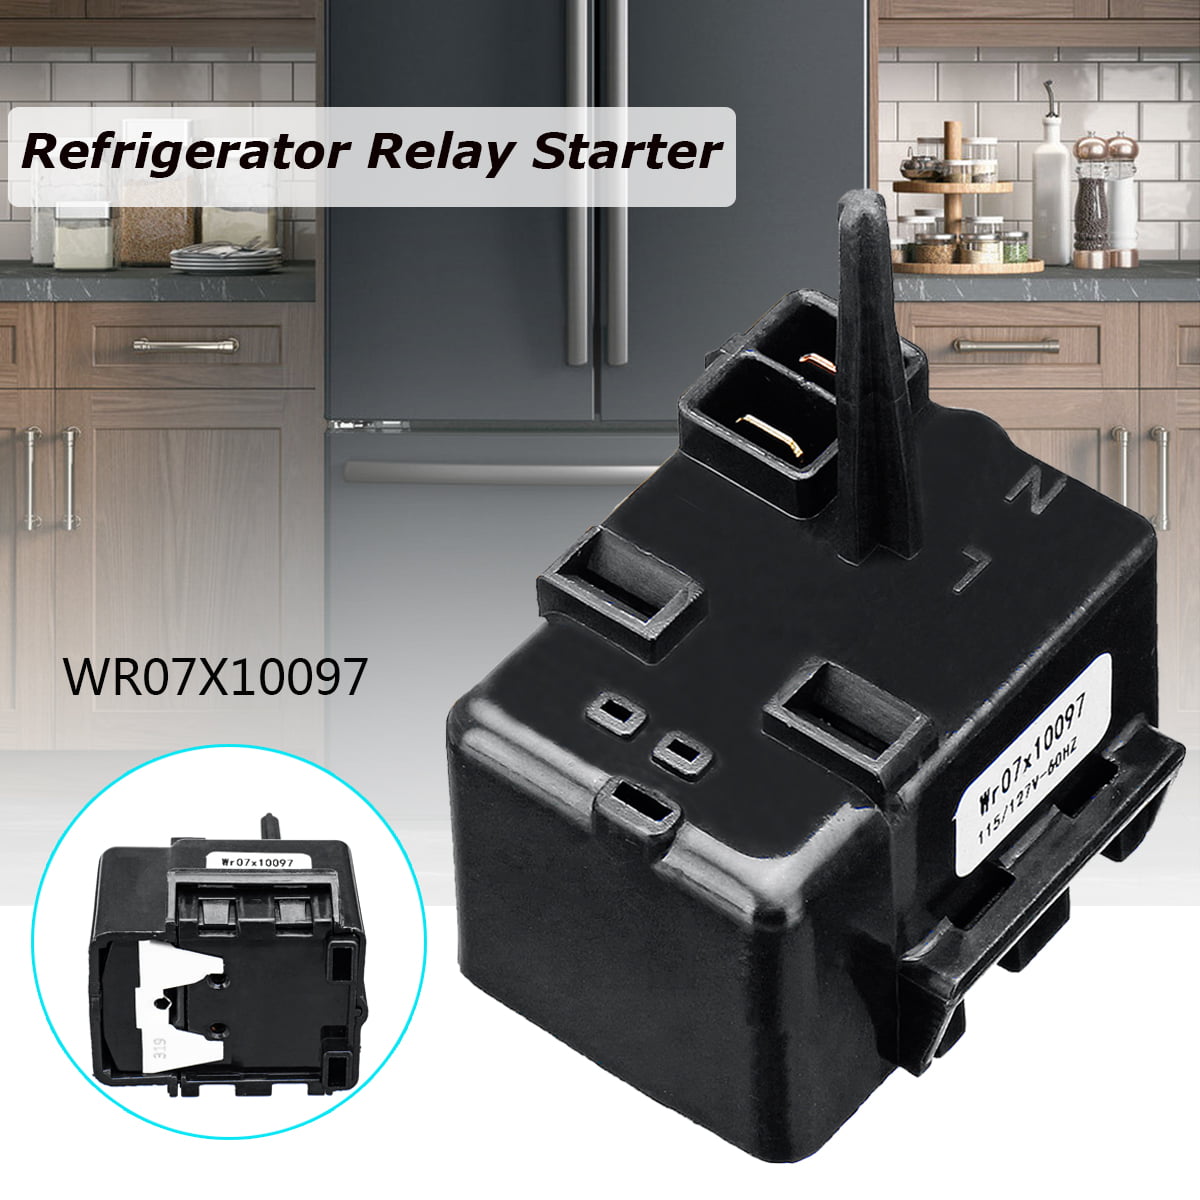 NEW Refrigerator Compressor Start Relay Starter for GE Refrigerator WR07X10097 